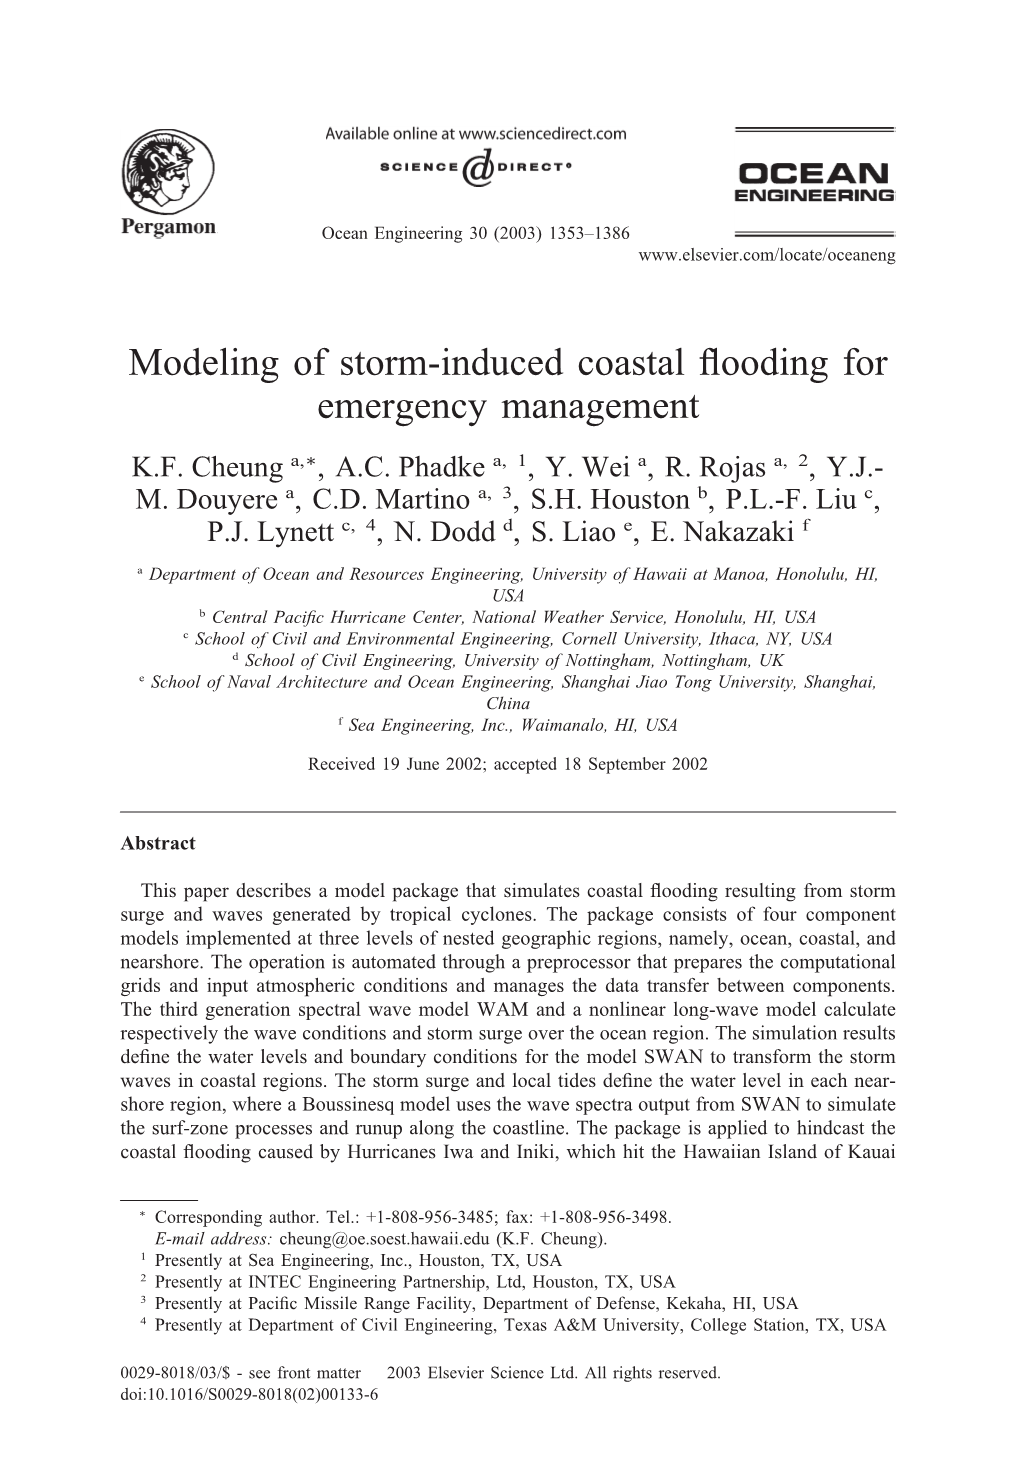 Modeling of Storm-Induced Coastal Flooding for Emergency Management